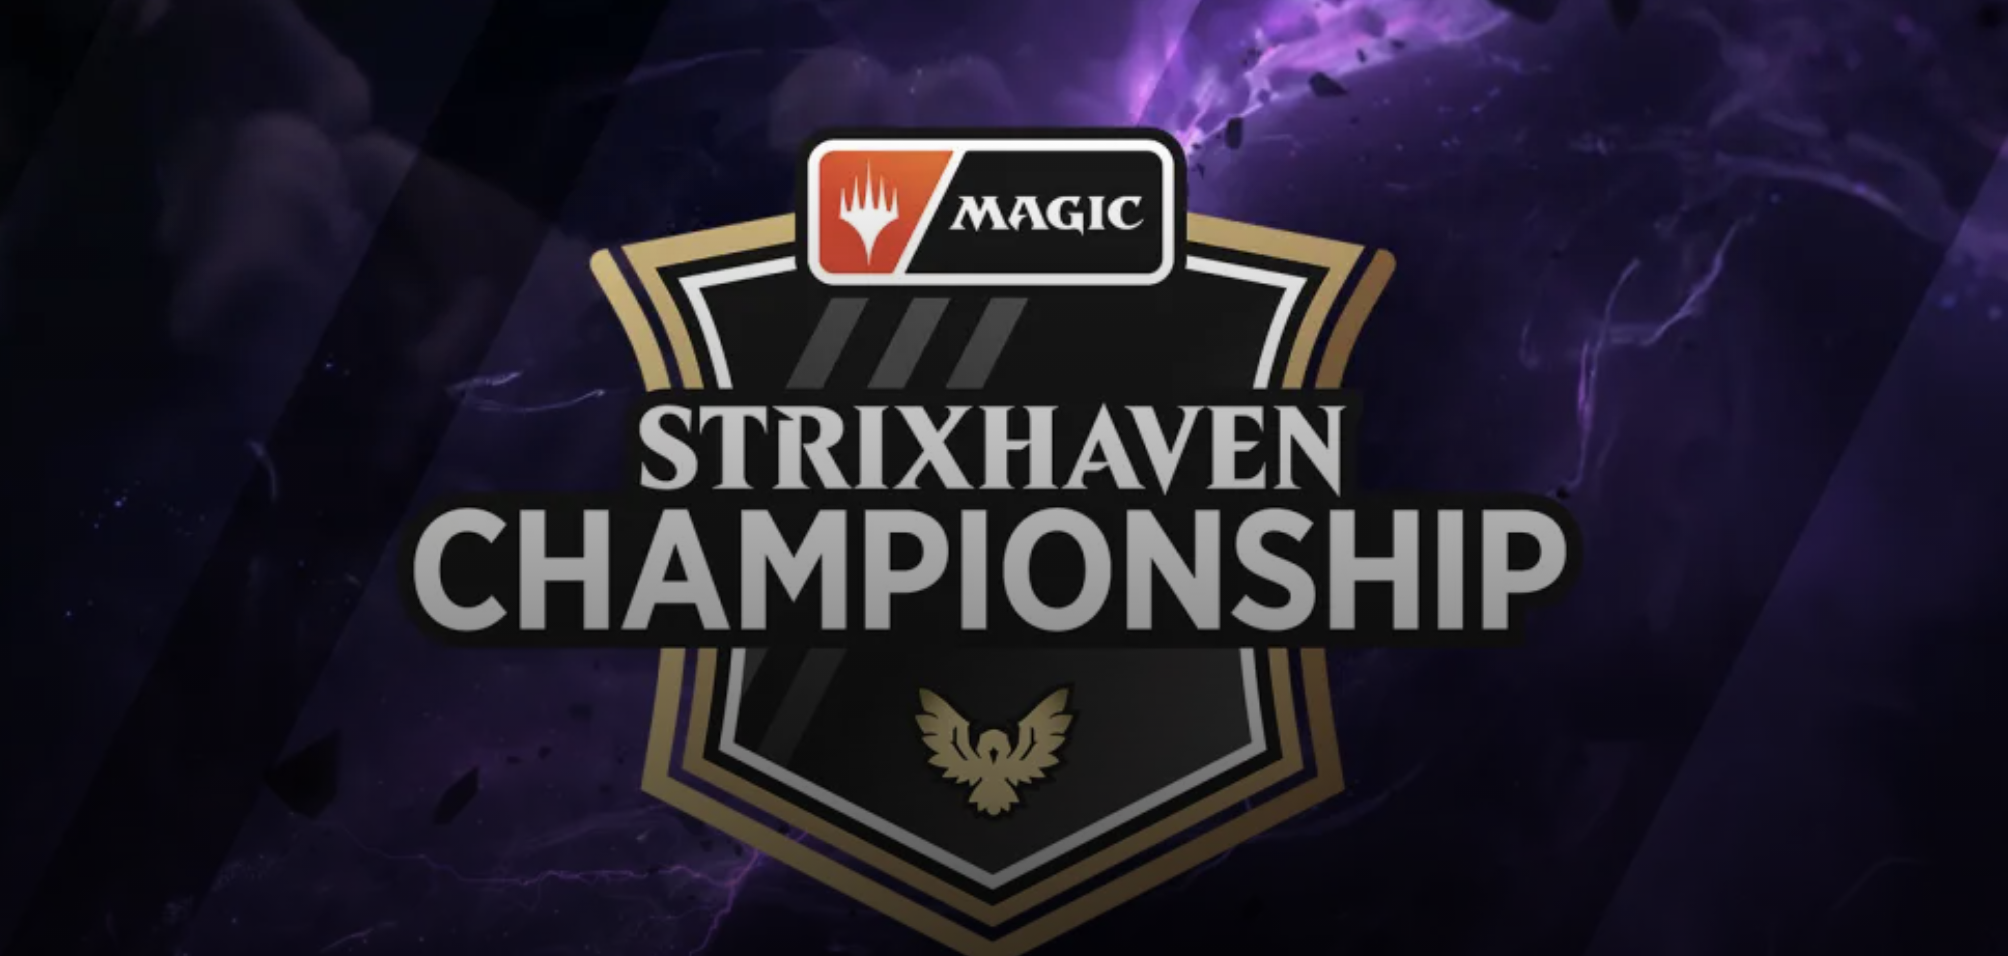 Strixhaven Championship official logo